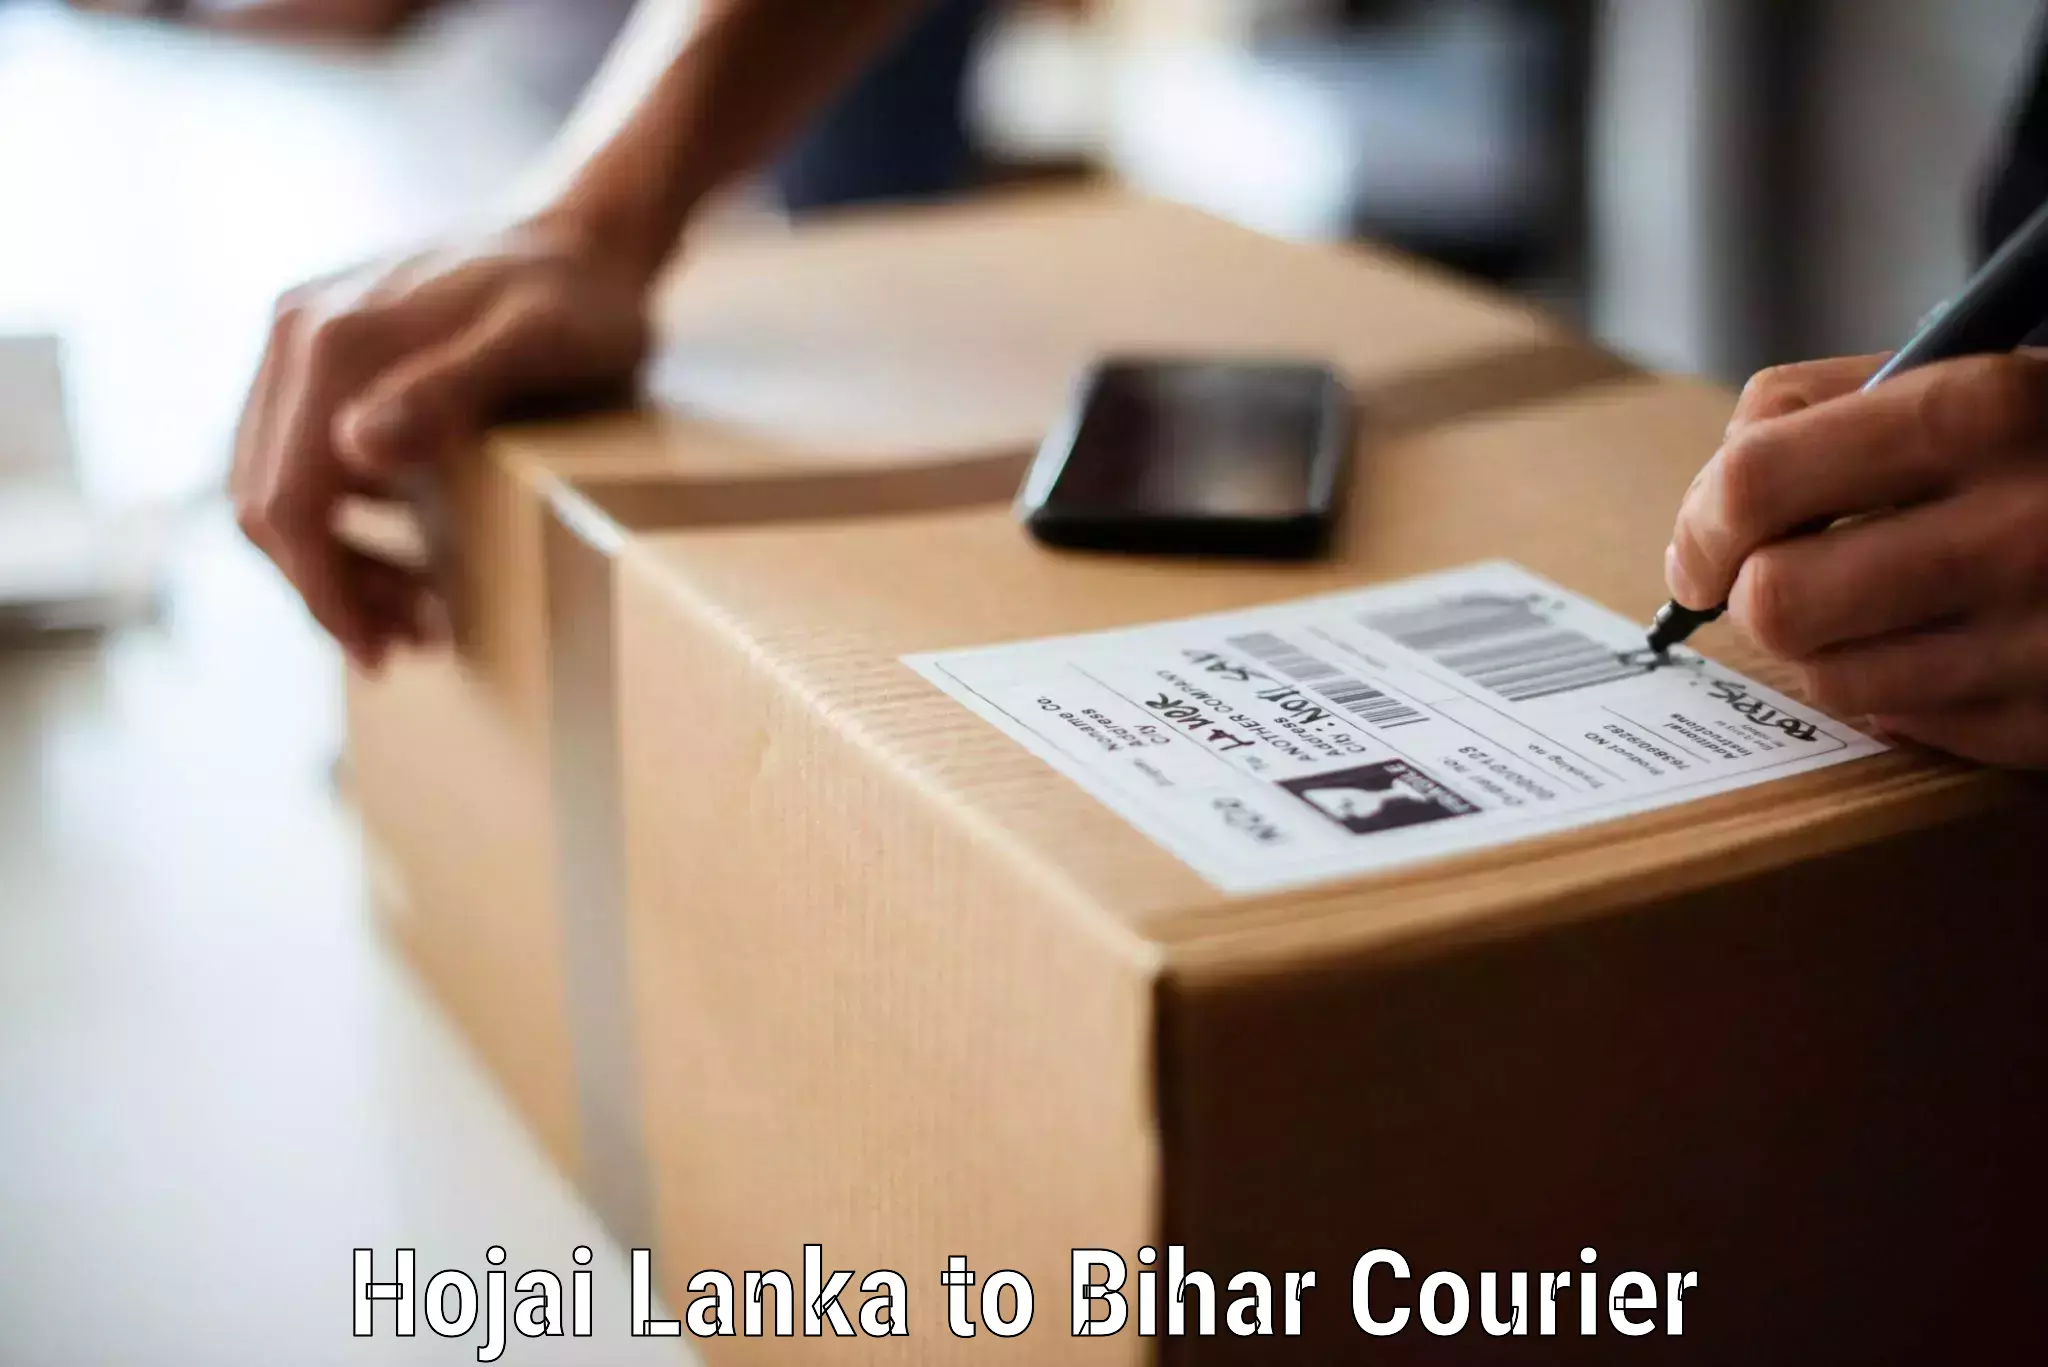 Customized relocation services Hojai Lanka to Bihar